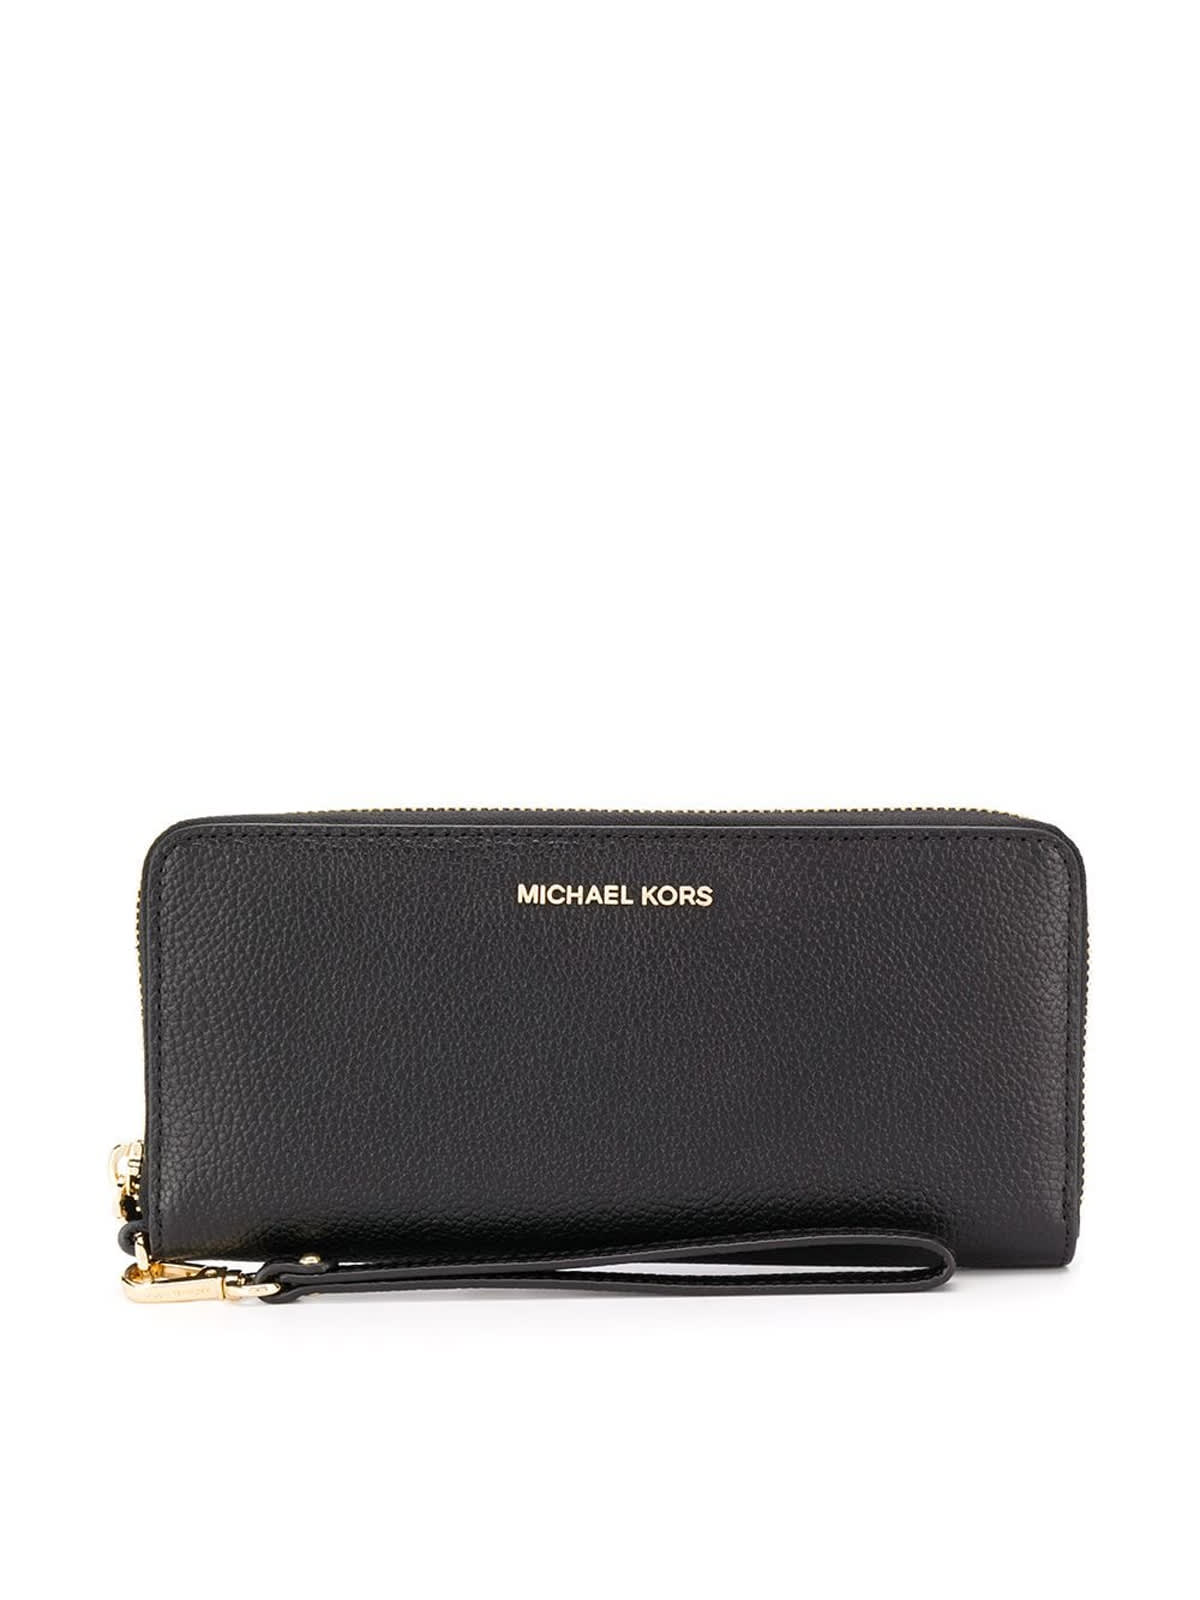 MICHAEL Michael Kors Jet Set Travel Leather Wallet in Gray